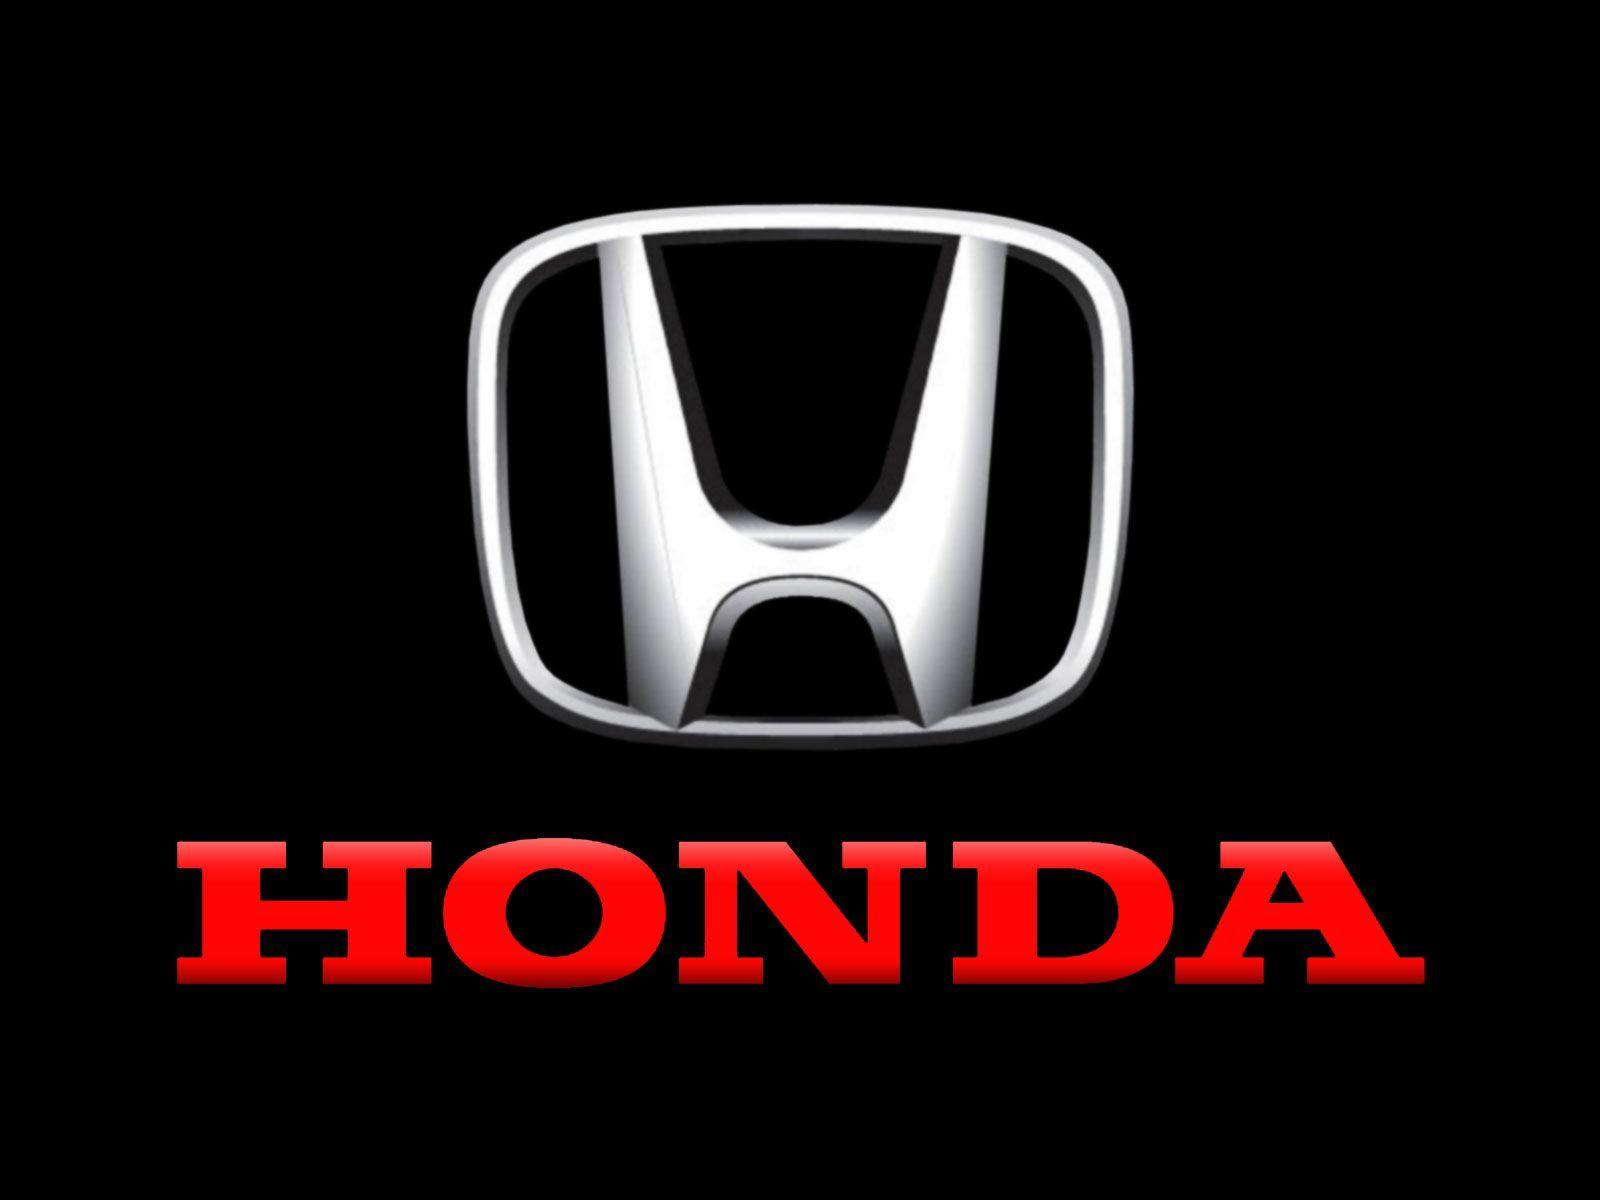 Honda Civic Logo - Honda Logo, Honda Car Symbol Meaning and History | Car Brand Names ...